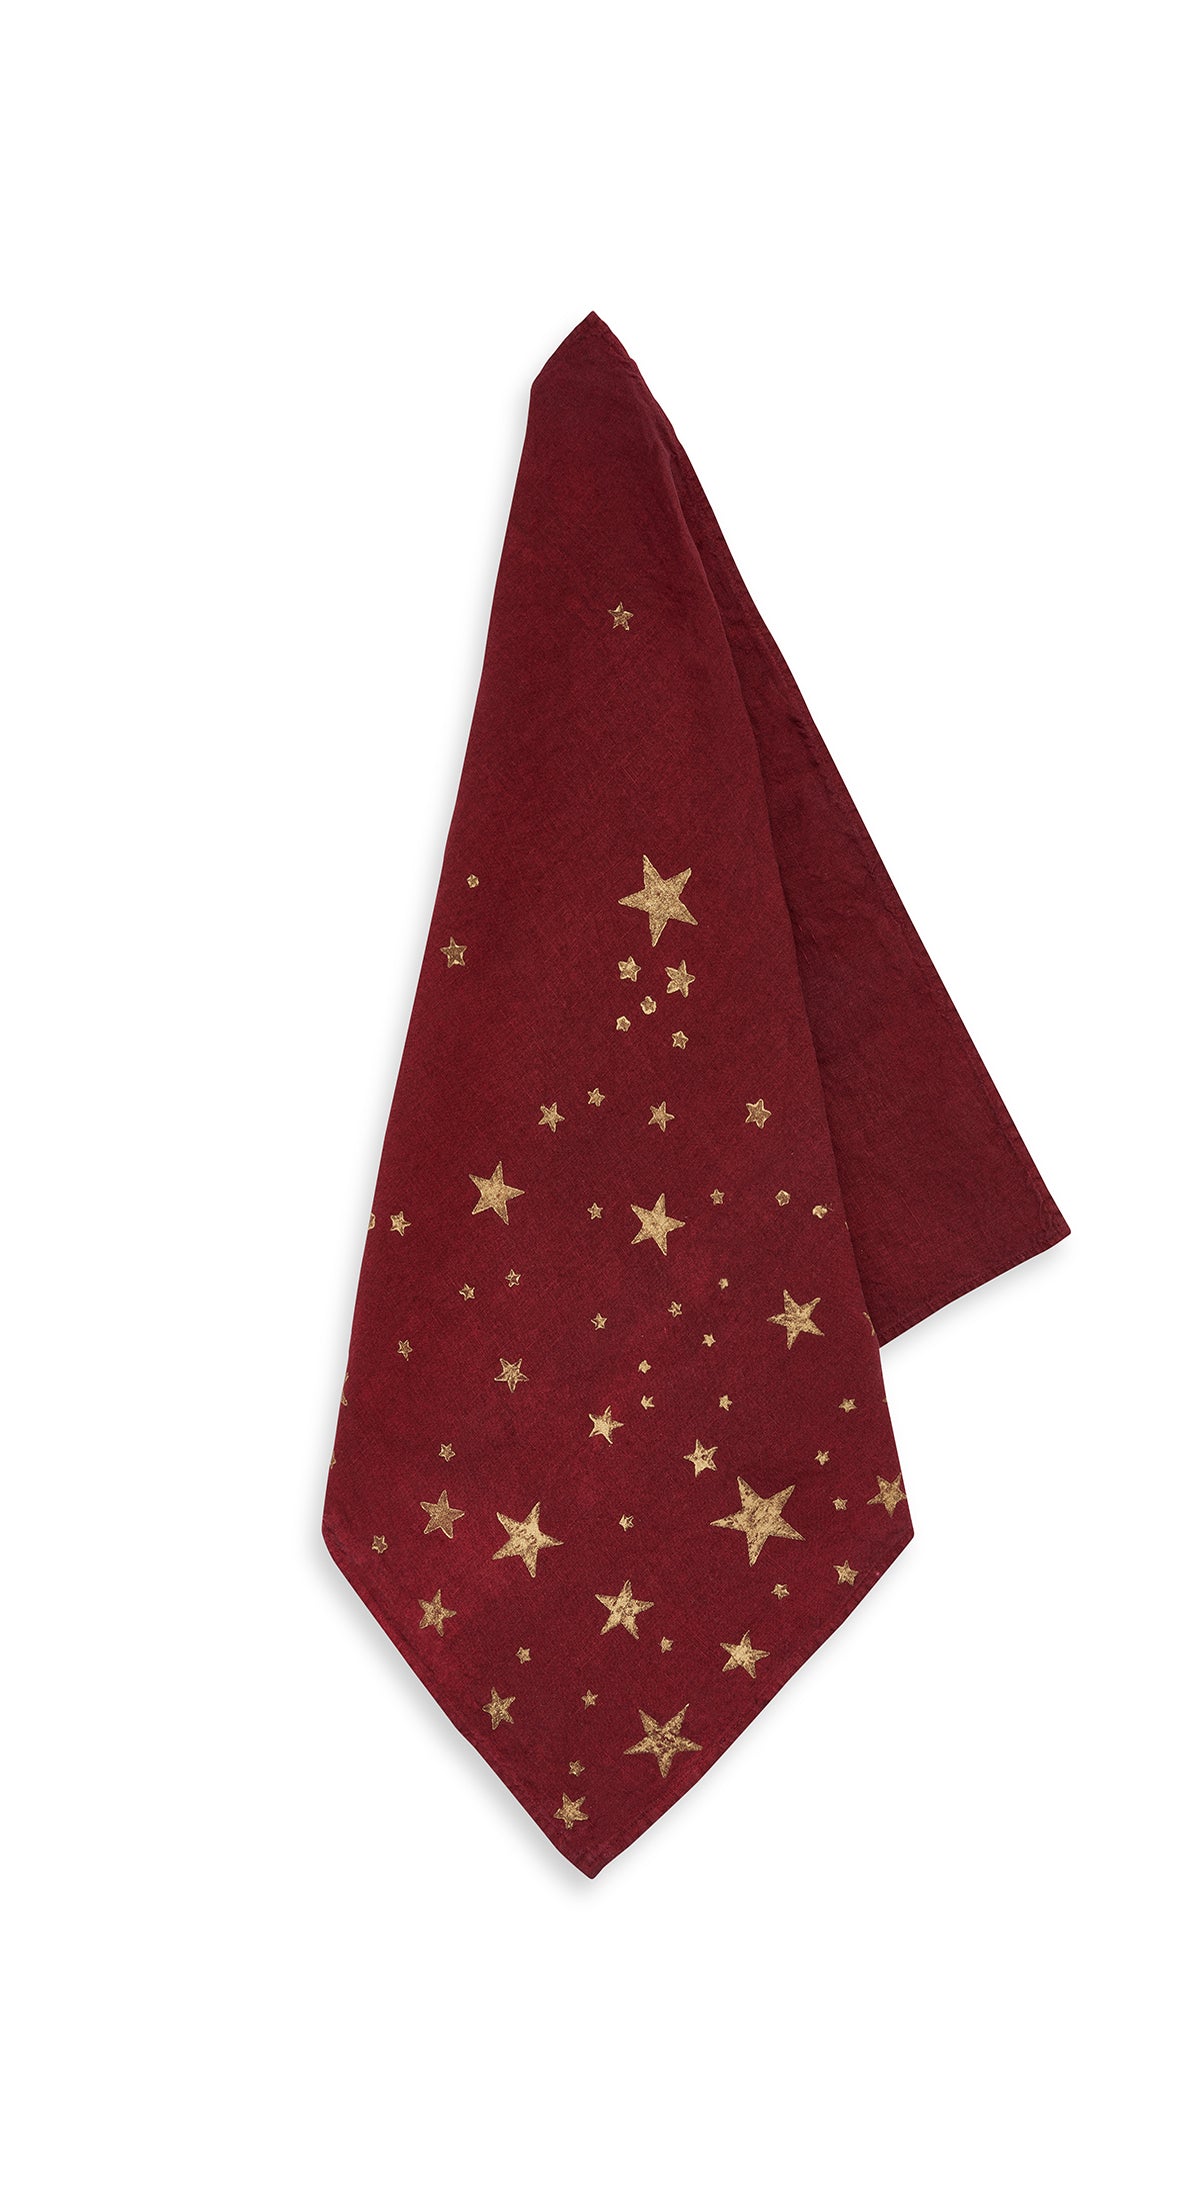 Falling Stars Linen Napkin in Claret Red, 50x50cm